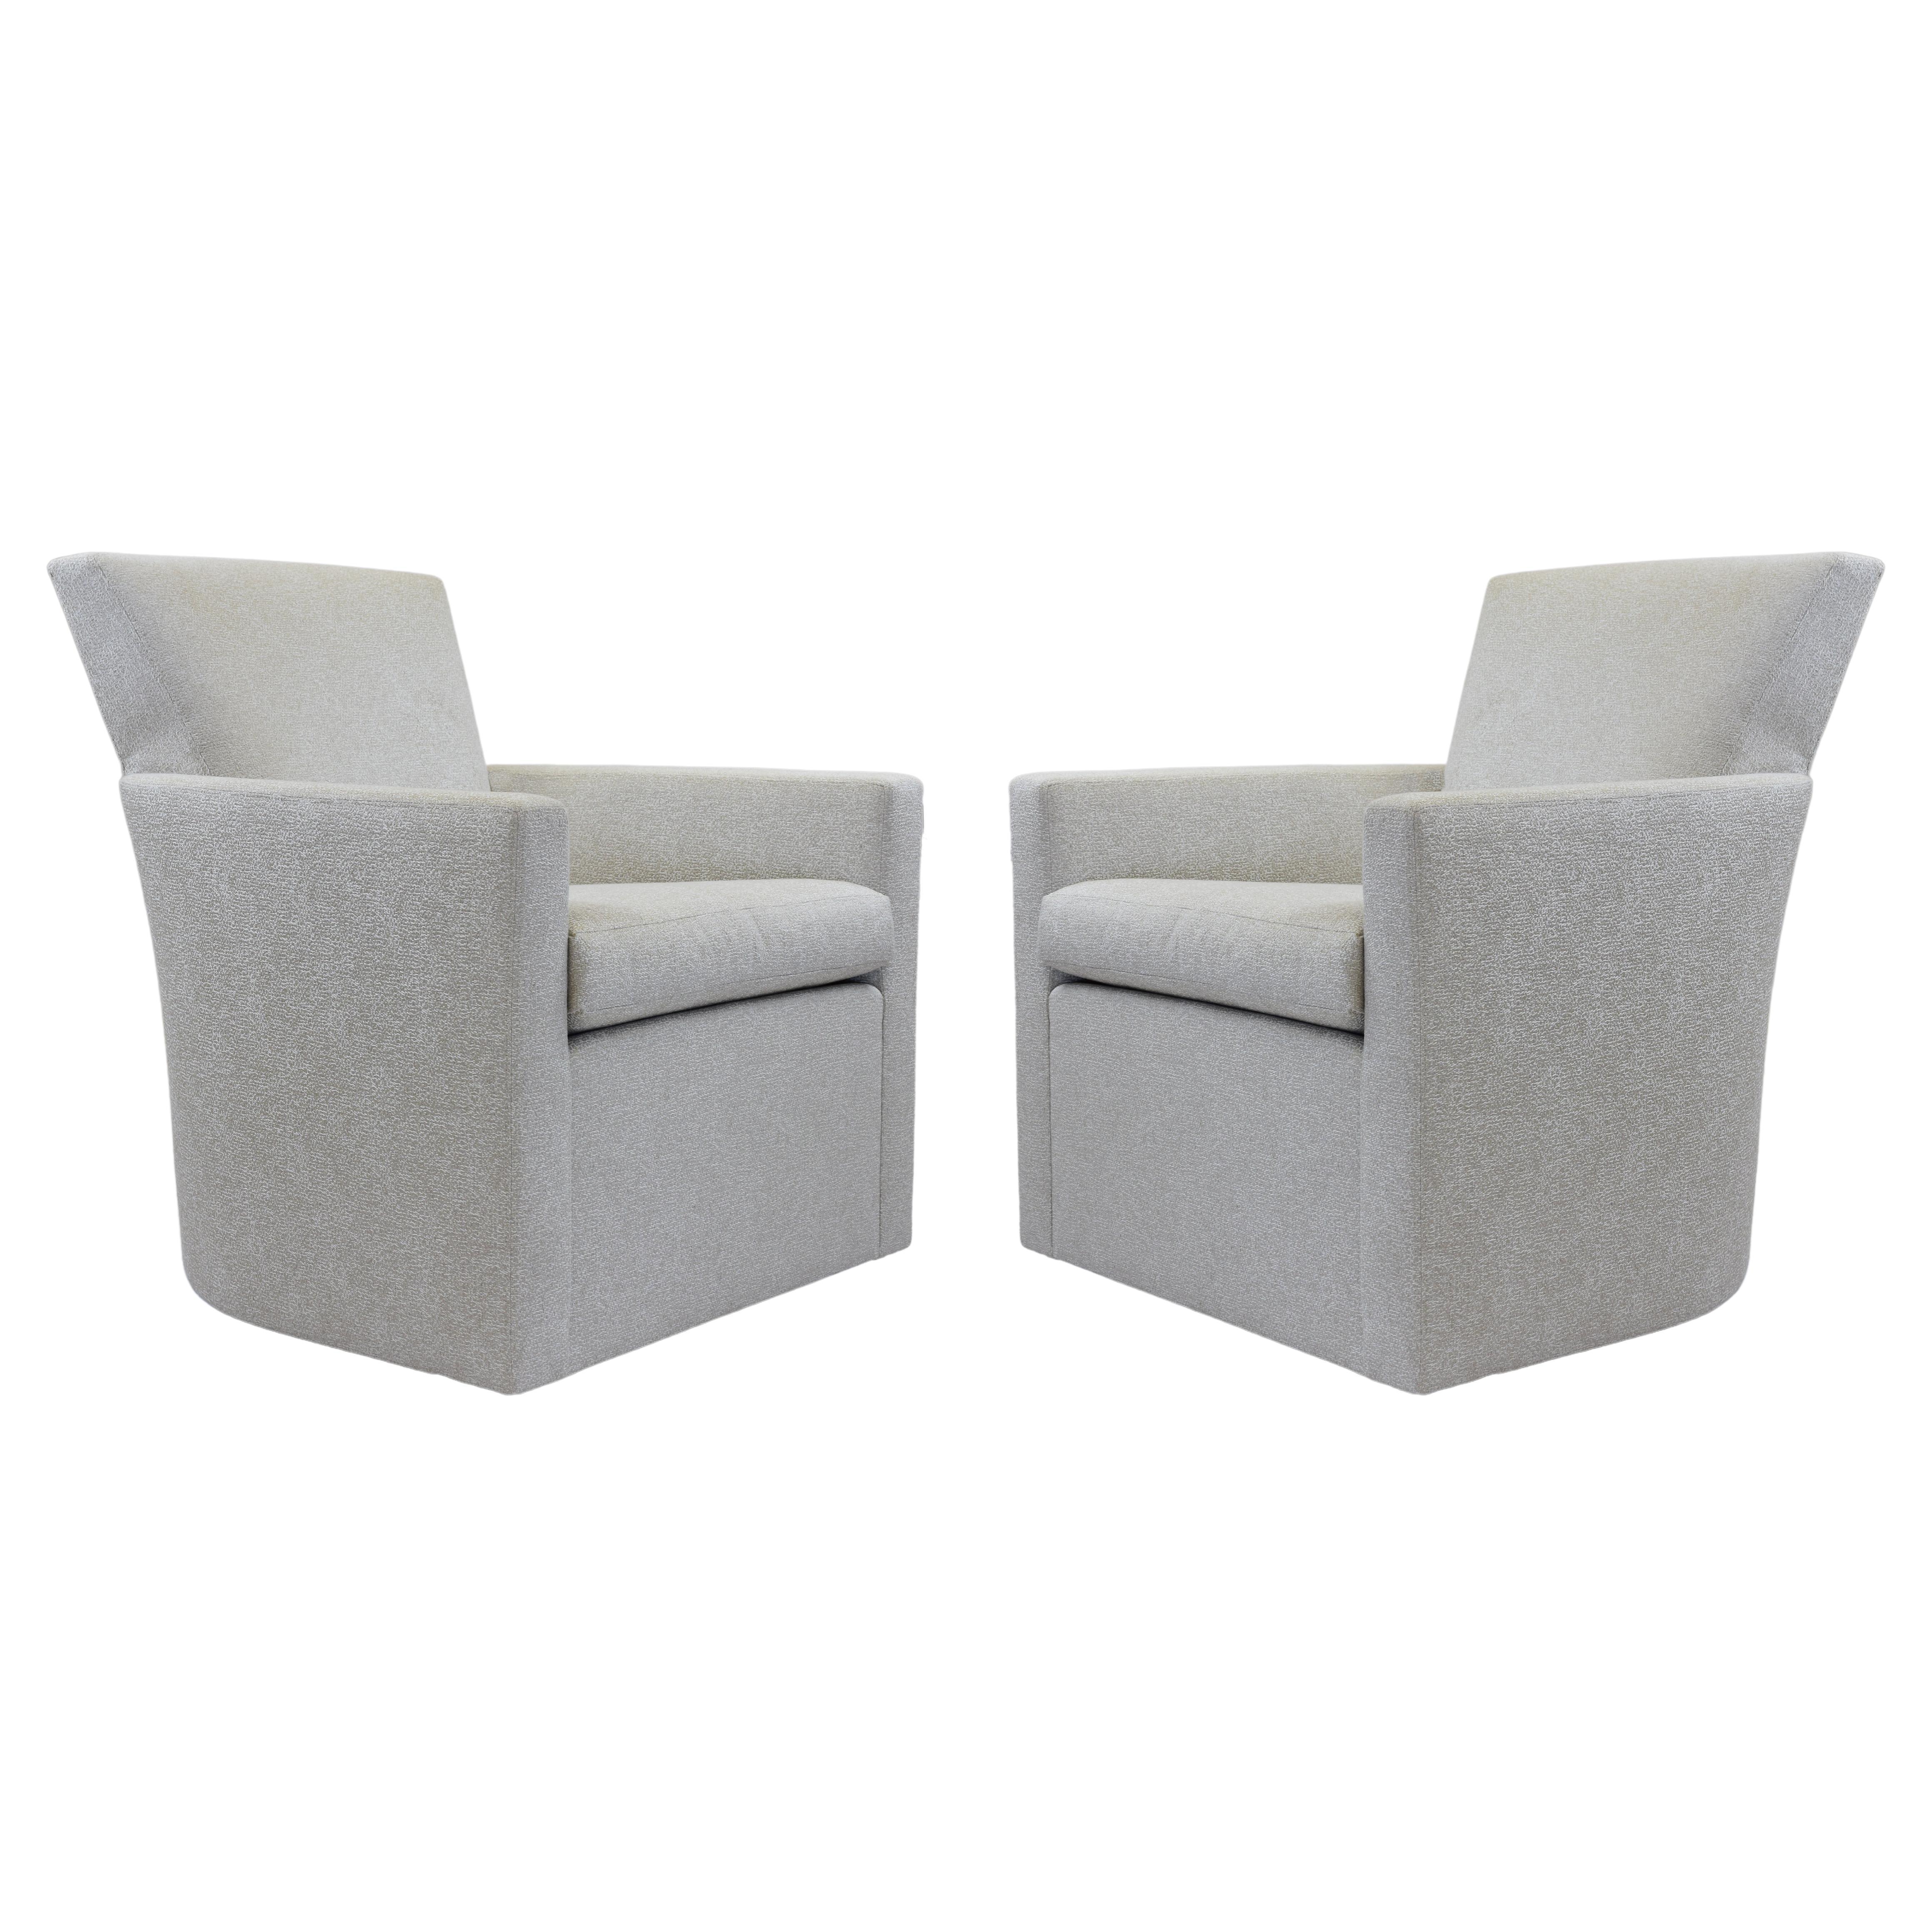 Le Jeune Upholstery Barrel Swivel Kara Chair Showroom Model, 2 Available